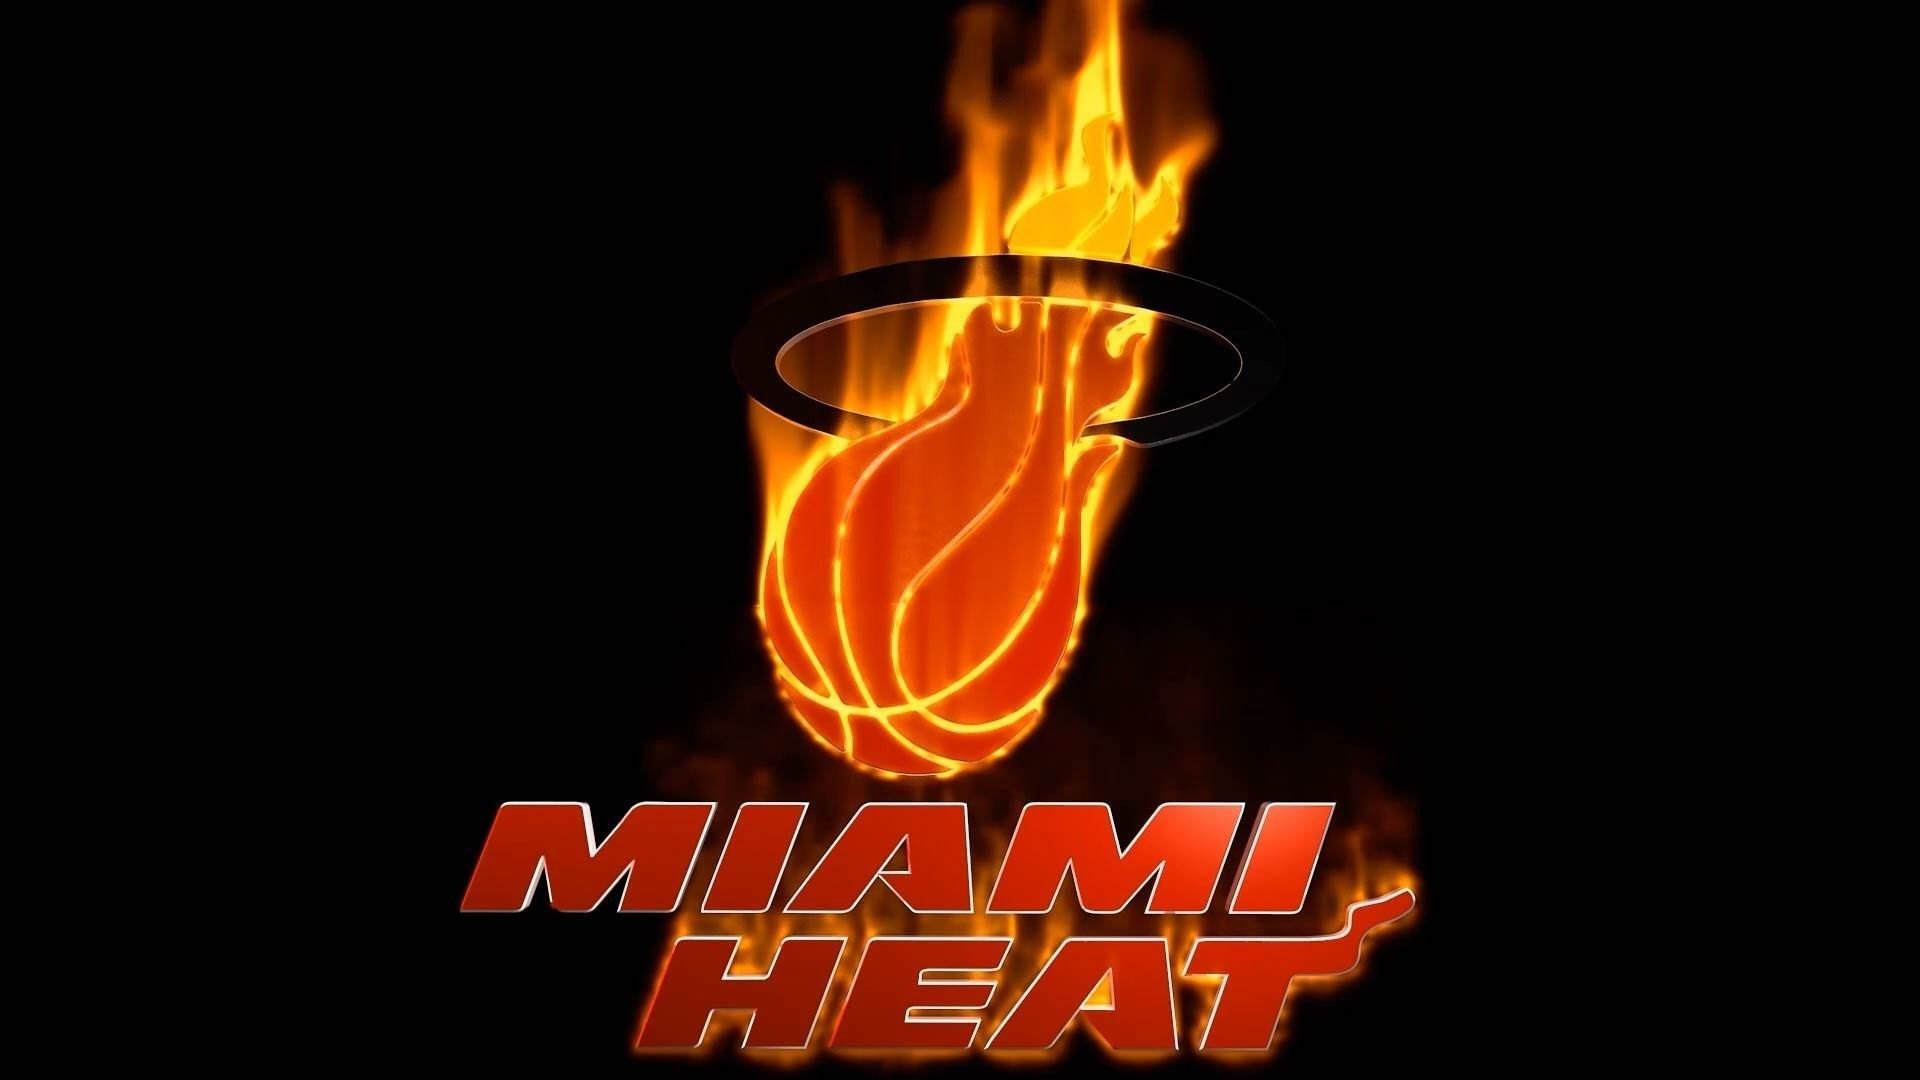 HD Desktop Wallpaper Miami Heat Basketball Wallpaper. Miami heat, Basketball wallpaper, Basketball wallpaper hd